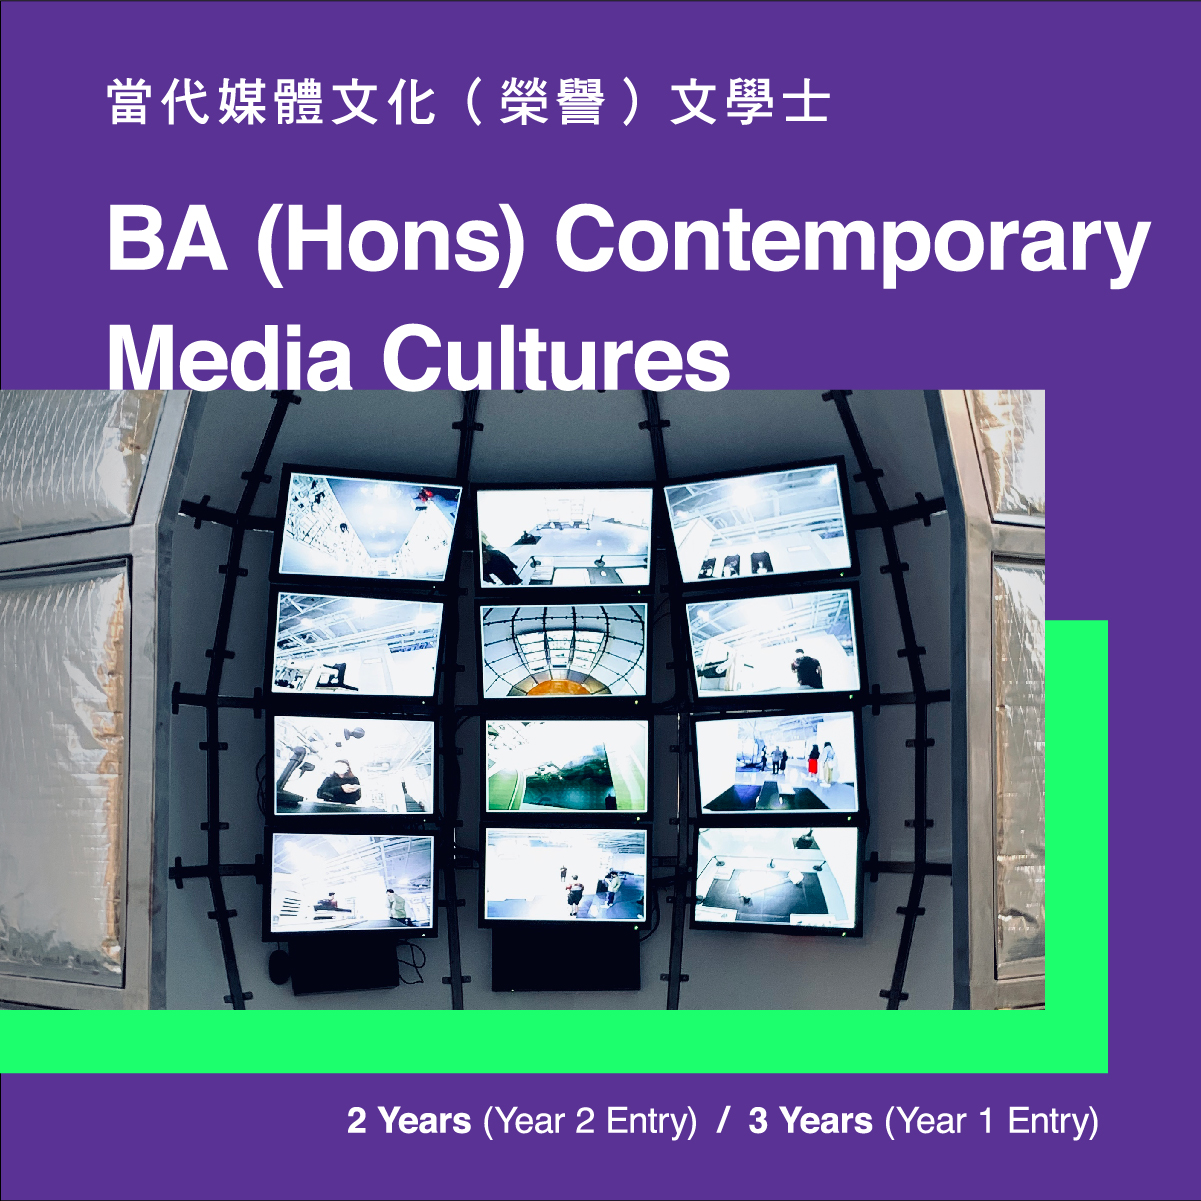 BA (Hons) Contemporary Media Cultures